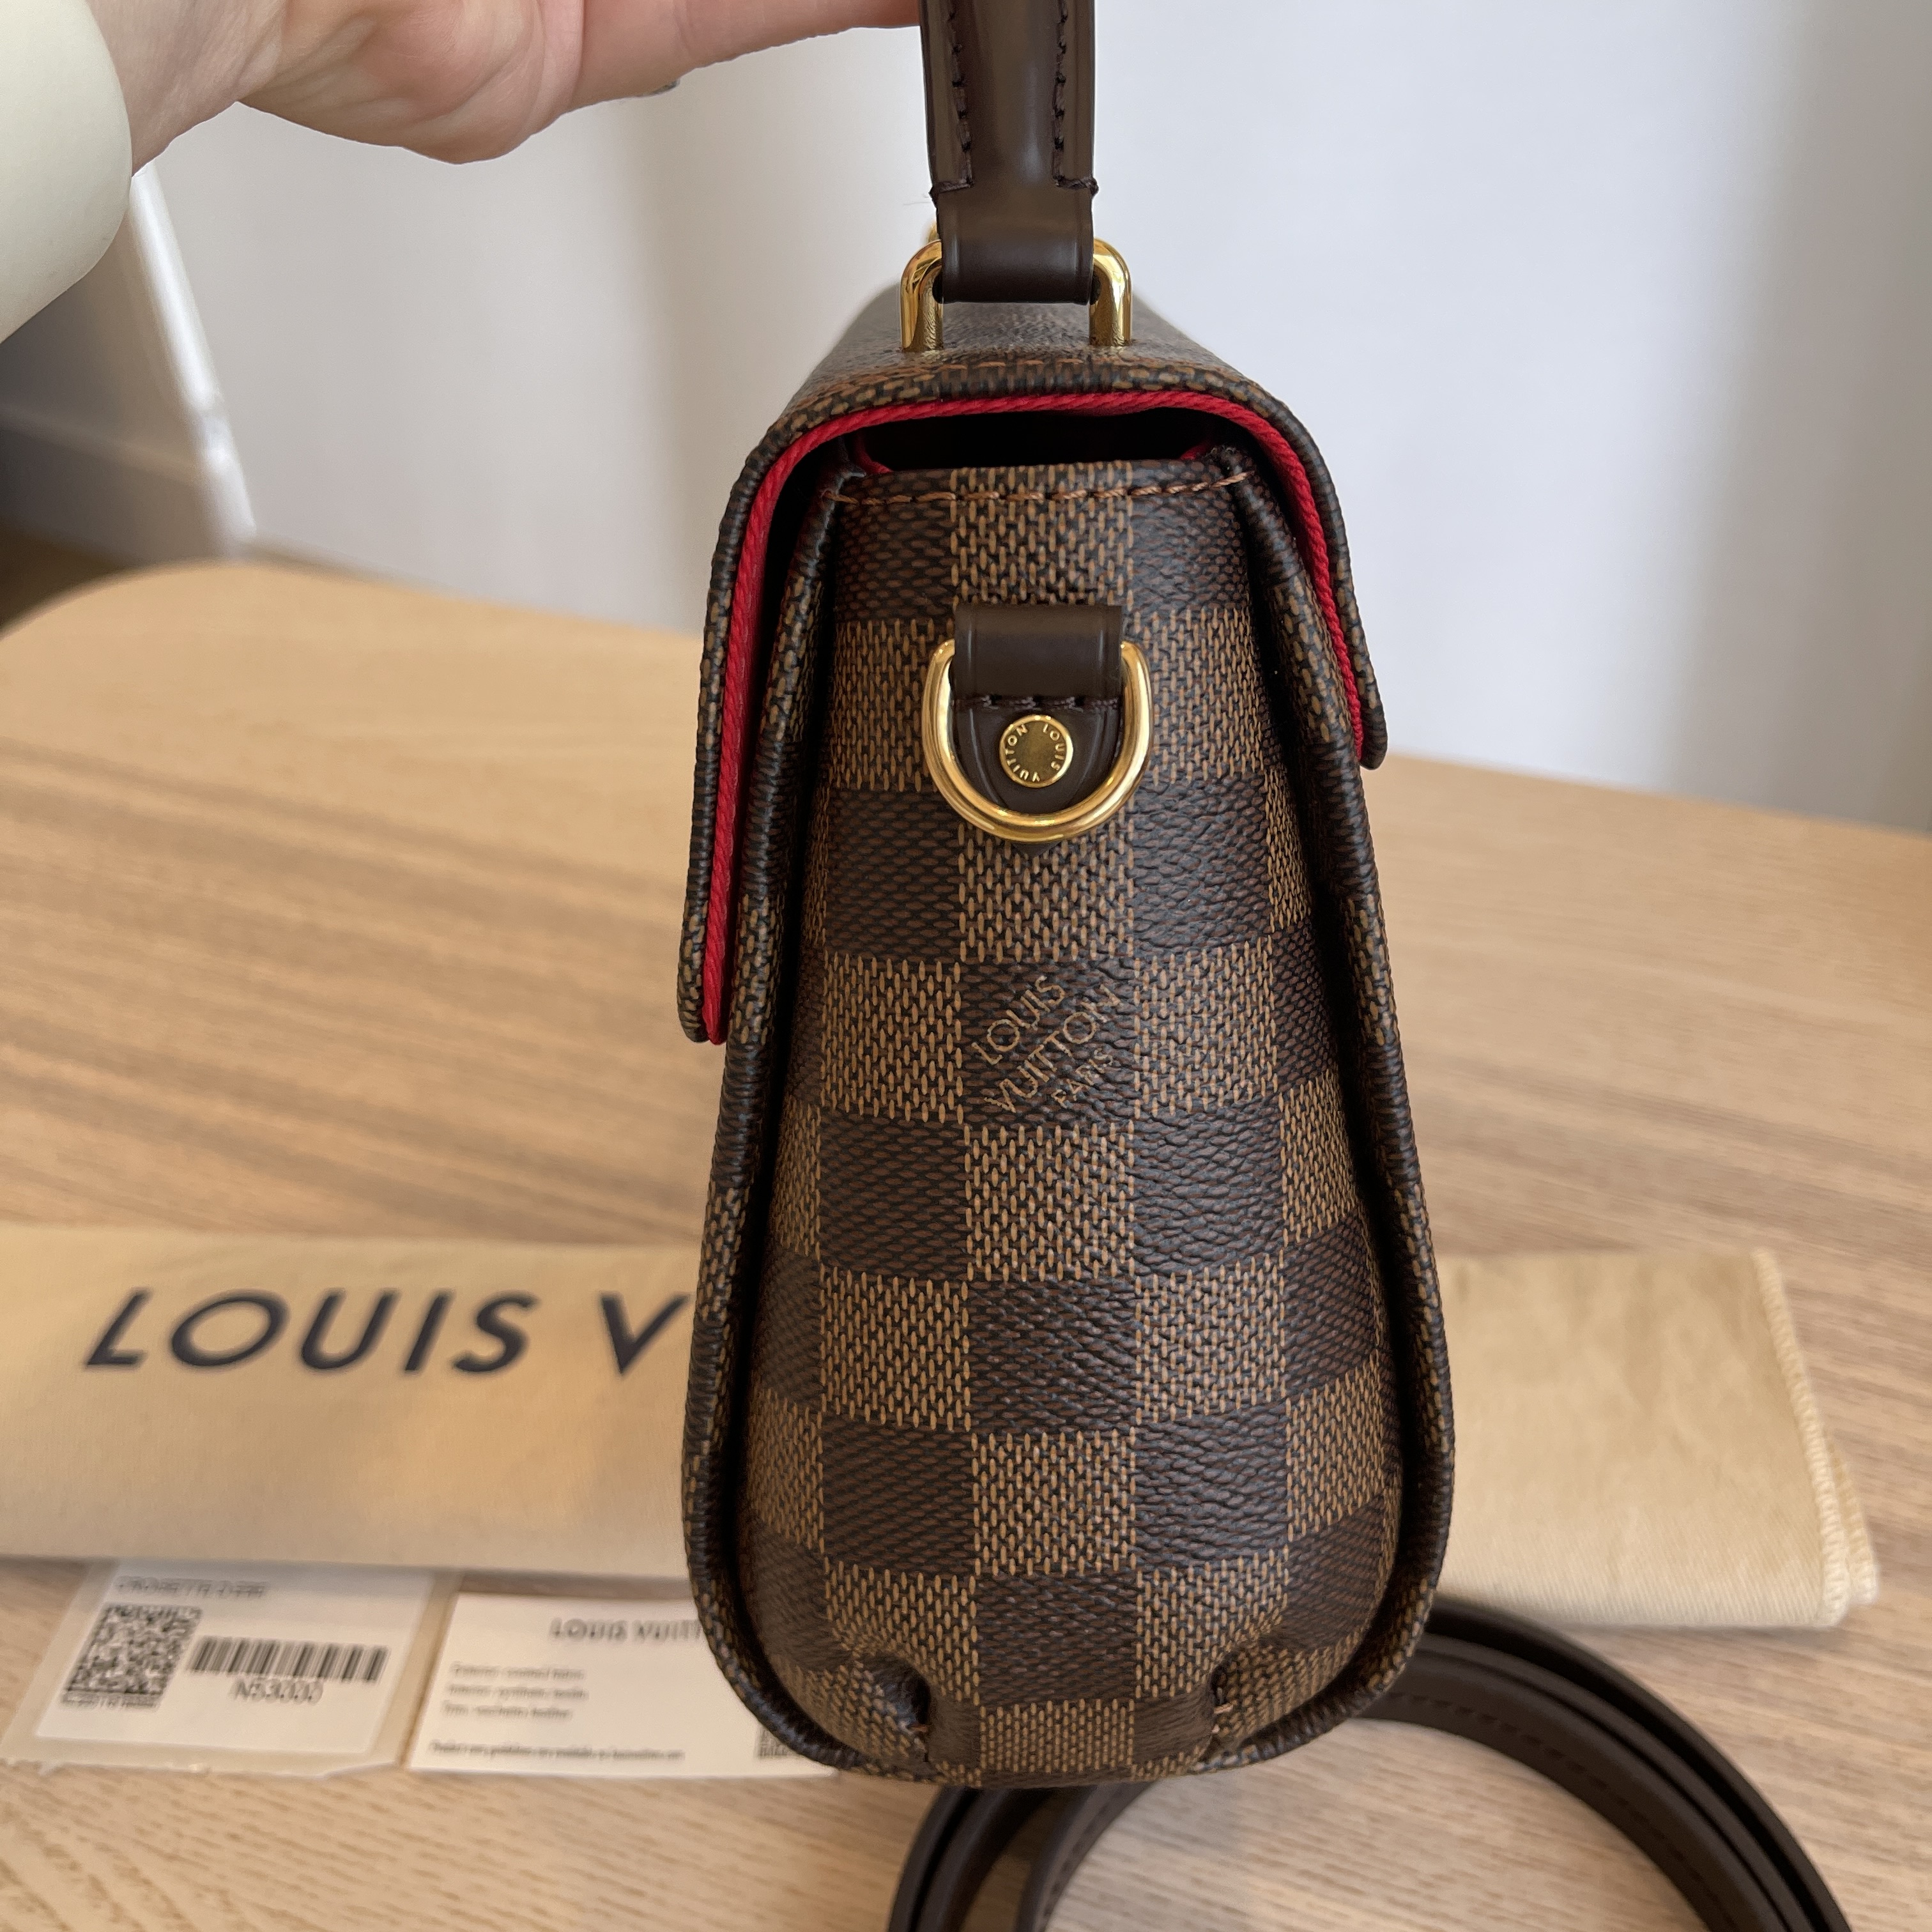 Louis Vuitton Handbag Damier Croisette Ladies N53000 Ebene Tassel